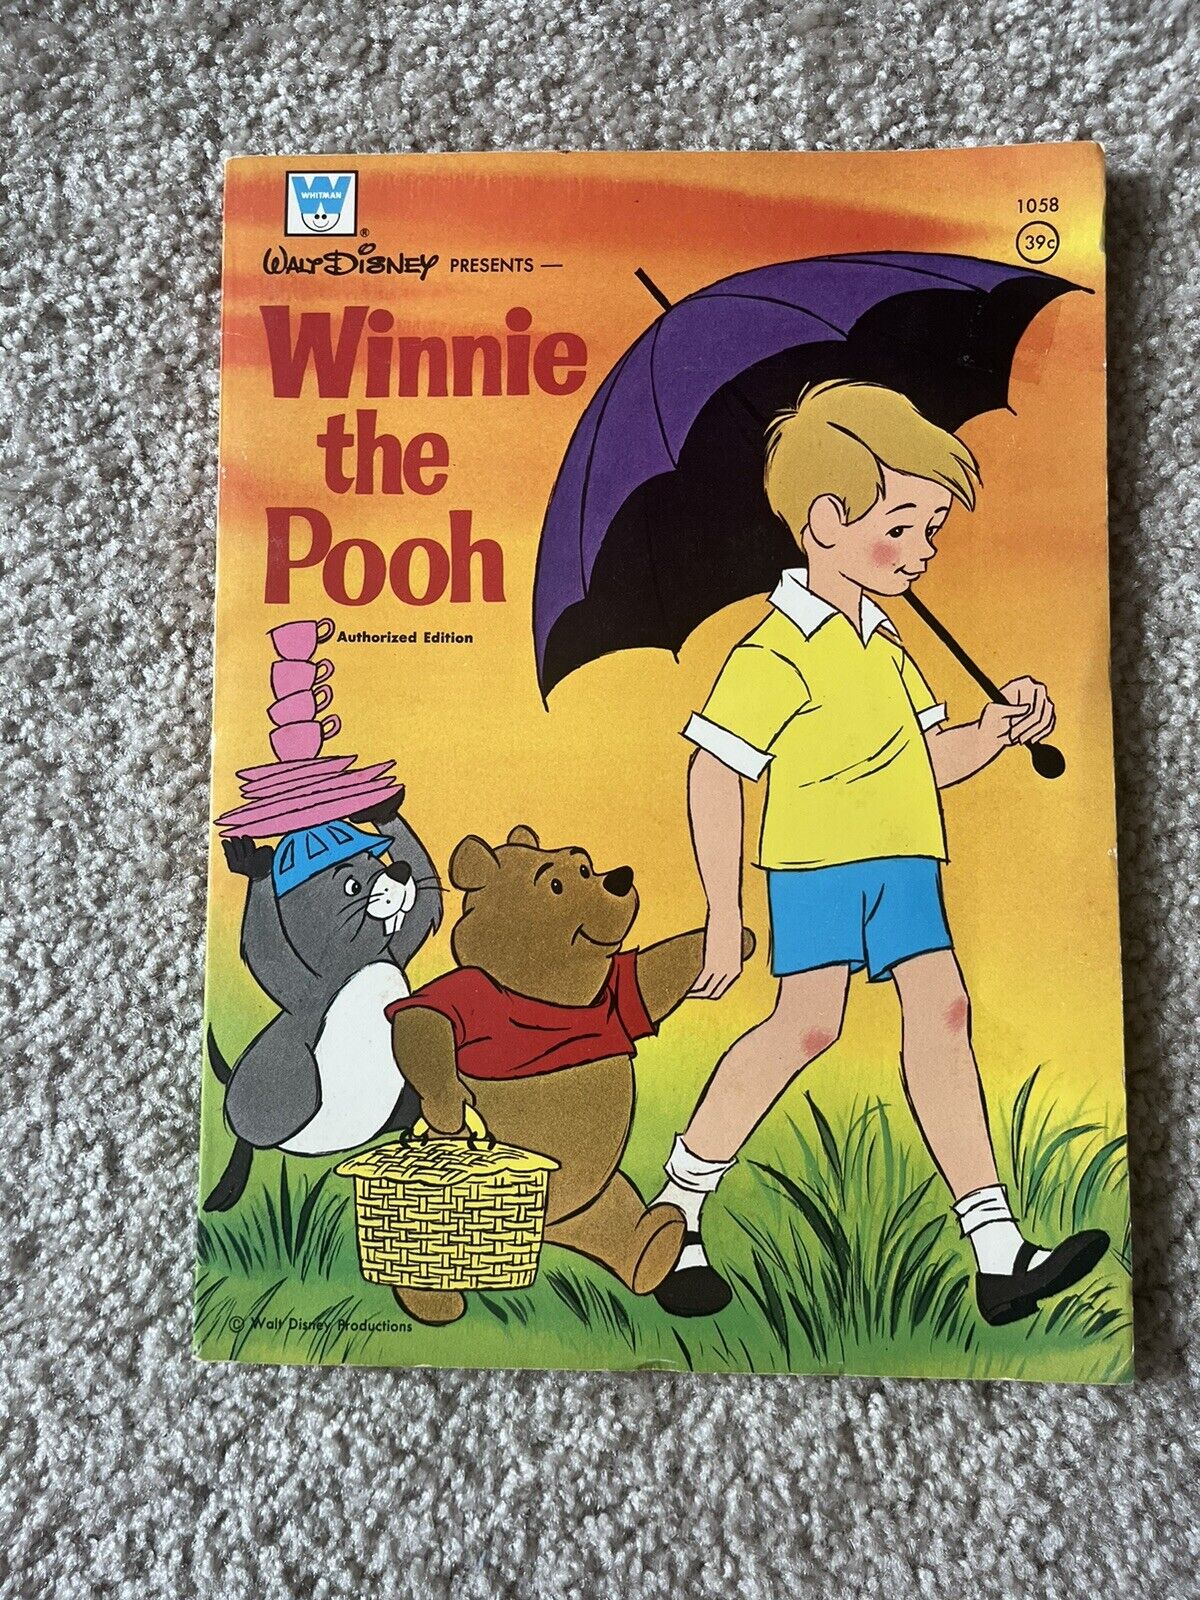 WALT DISNEY coloring book WINNIE THE POOH UNUSED 1960's vintage Authorized Ed.